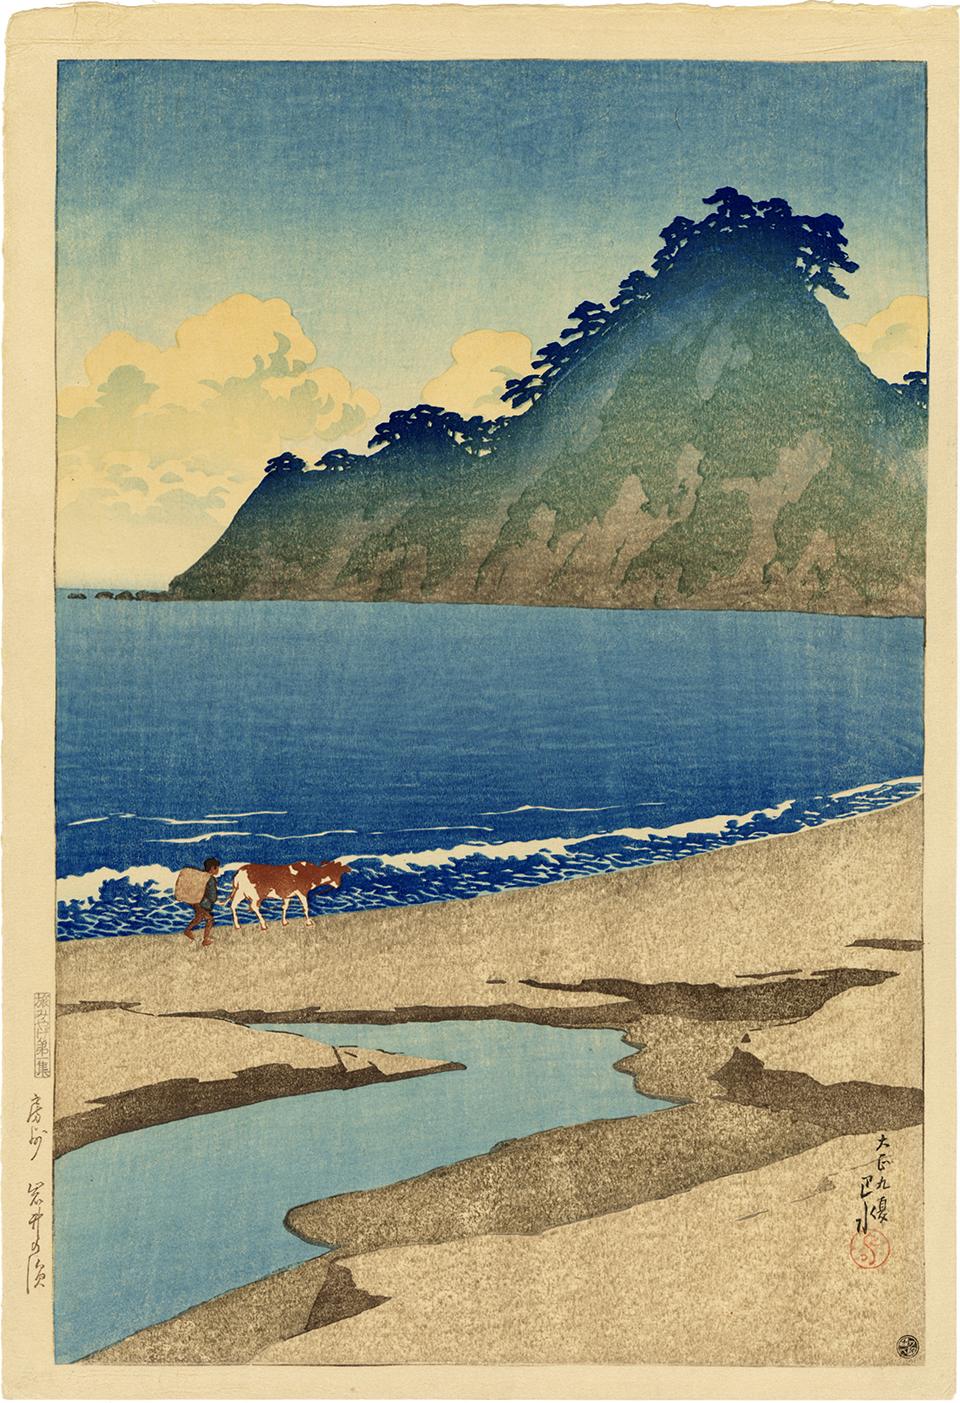 Kawase Hasui Landscape Print - Iwai Seashore in Boshu